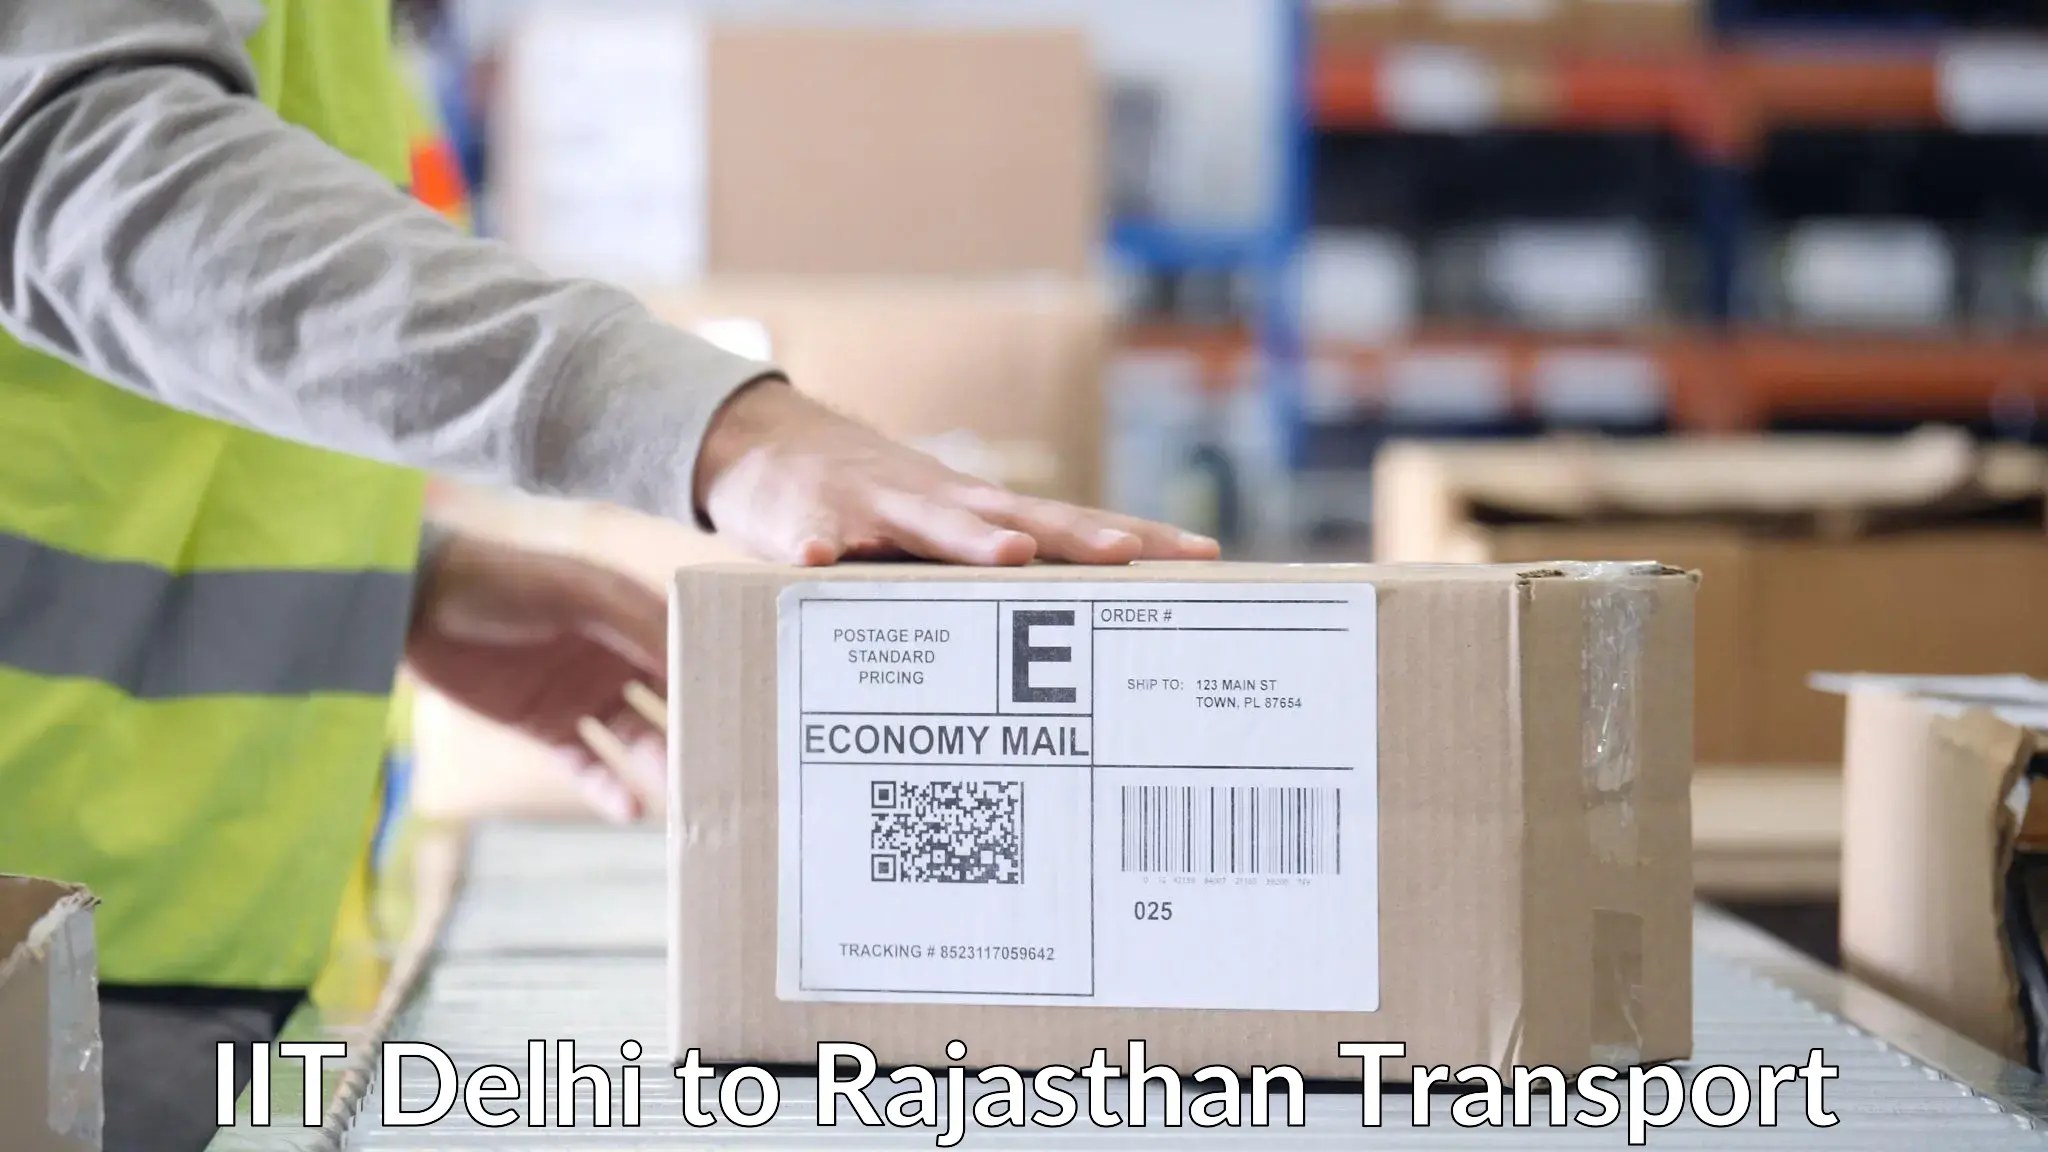 Delivery service IIT Delhi to Kaman